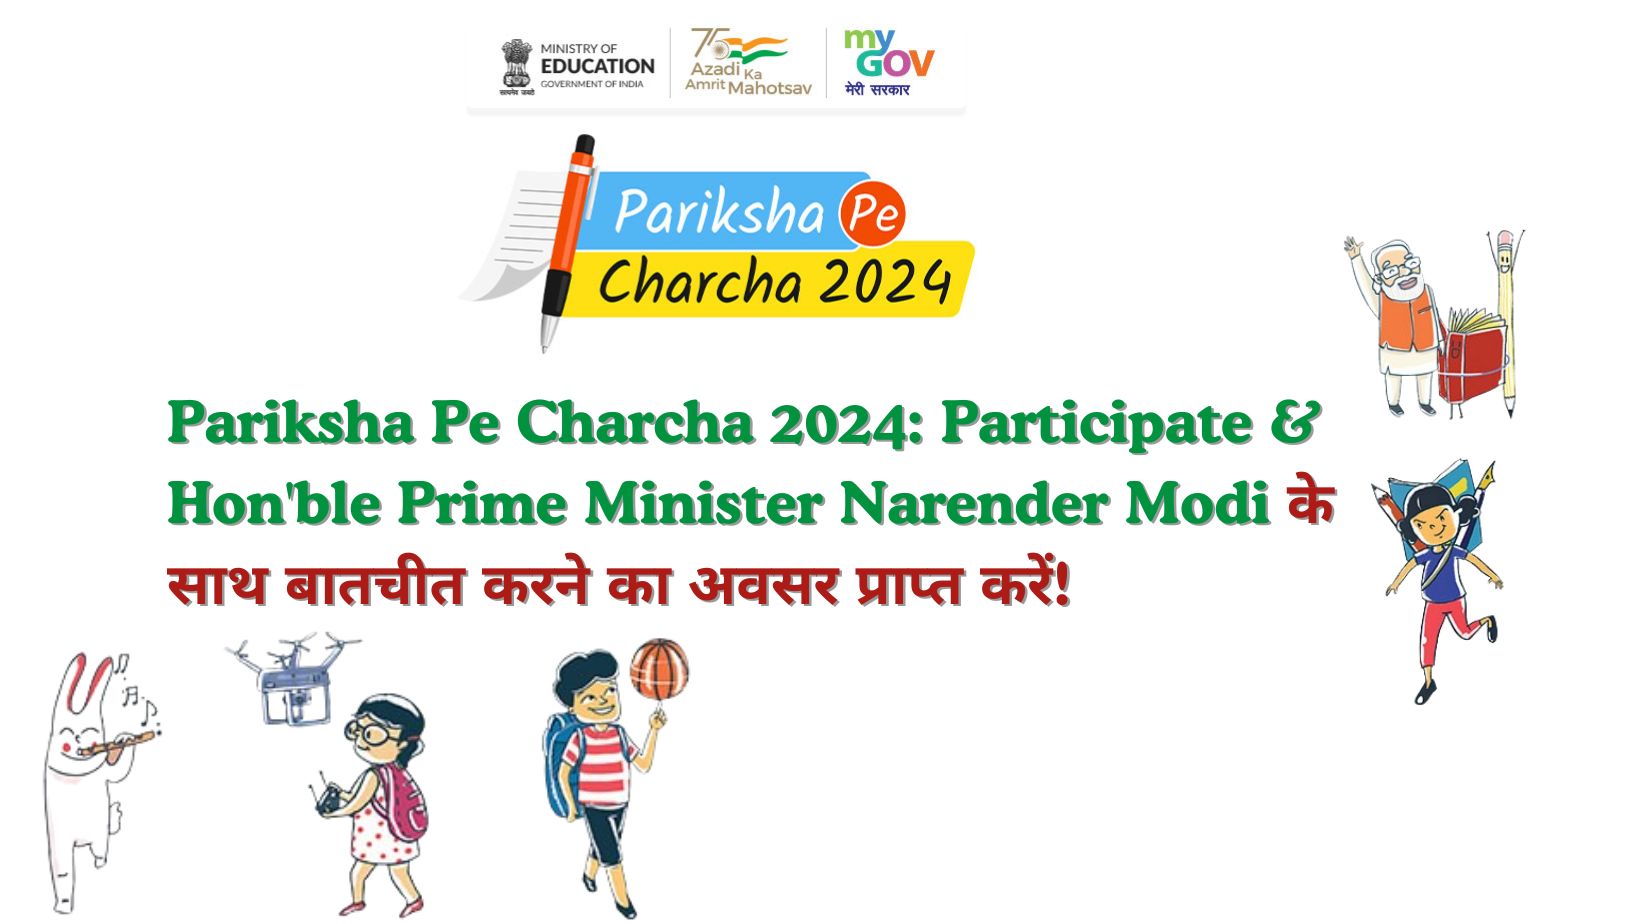 Pariksha Pe Charcha 2024: Participate & Hon'ble Prime Minister Narender Modi के साथ बातचीत करने का अवसर प्राप्त करें!